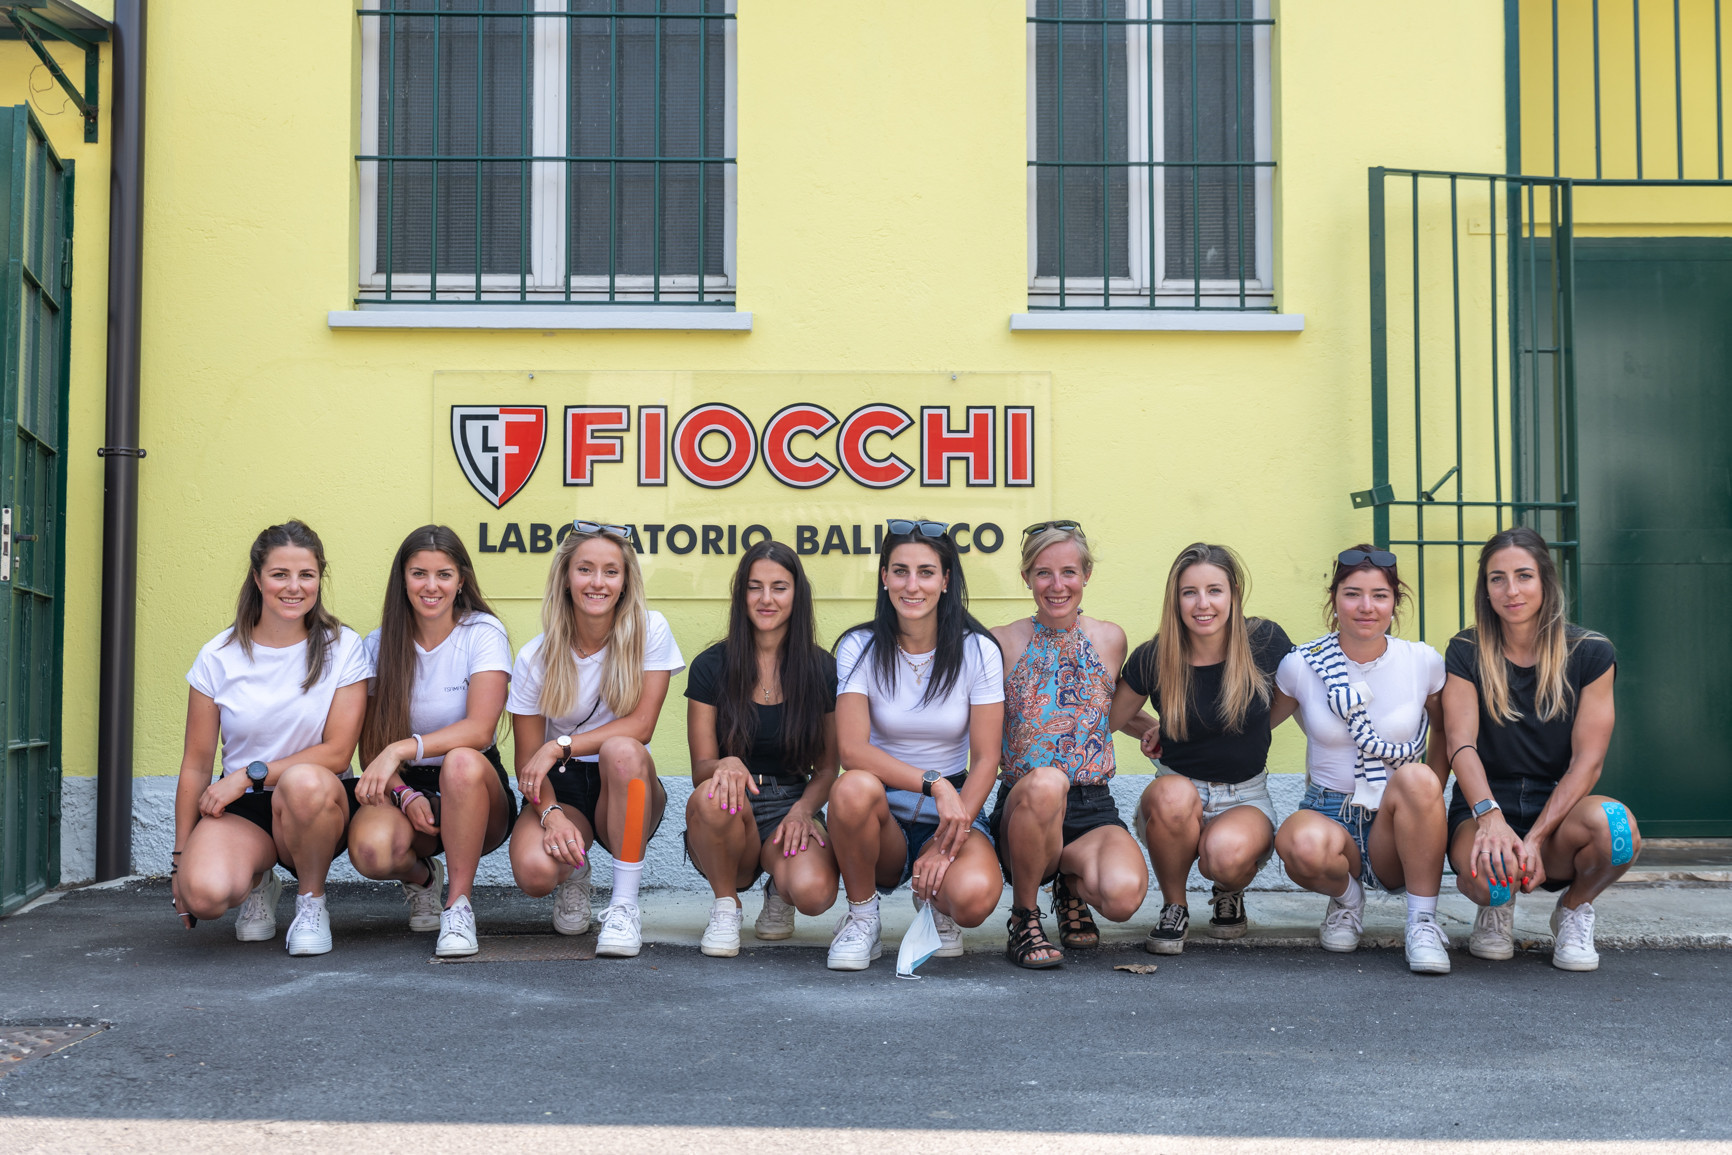 Italian women's Milan Cortina biathlon team visits headquarters of FISI ammunition partner